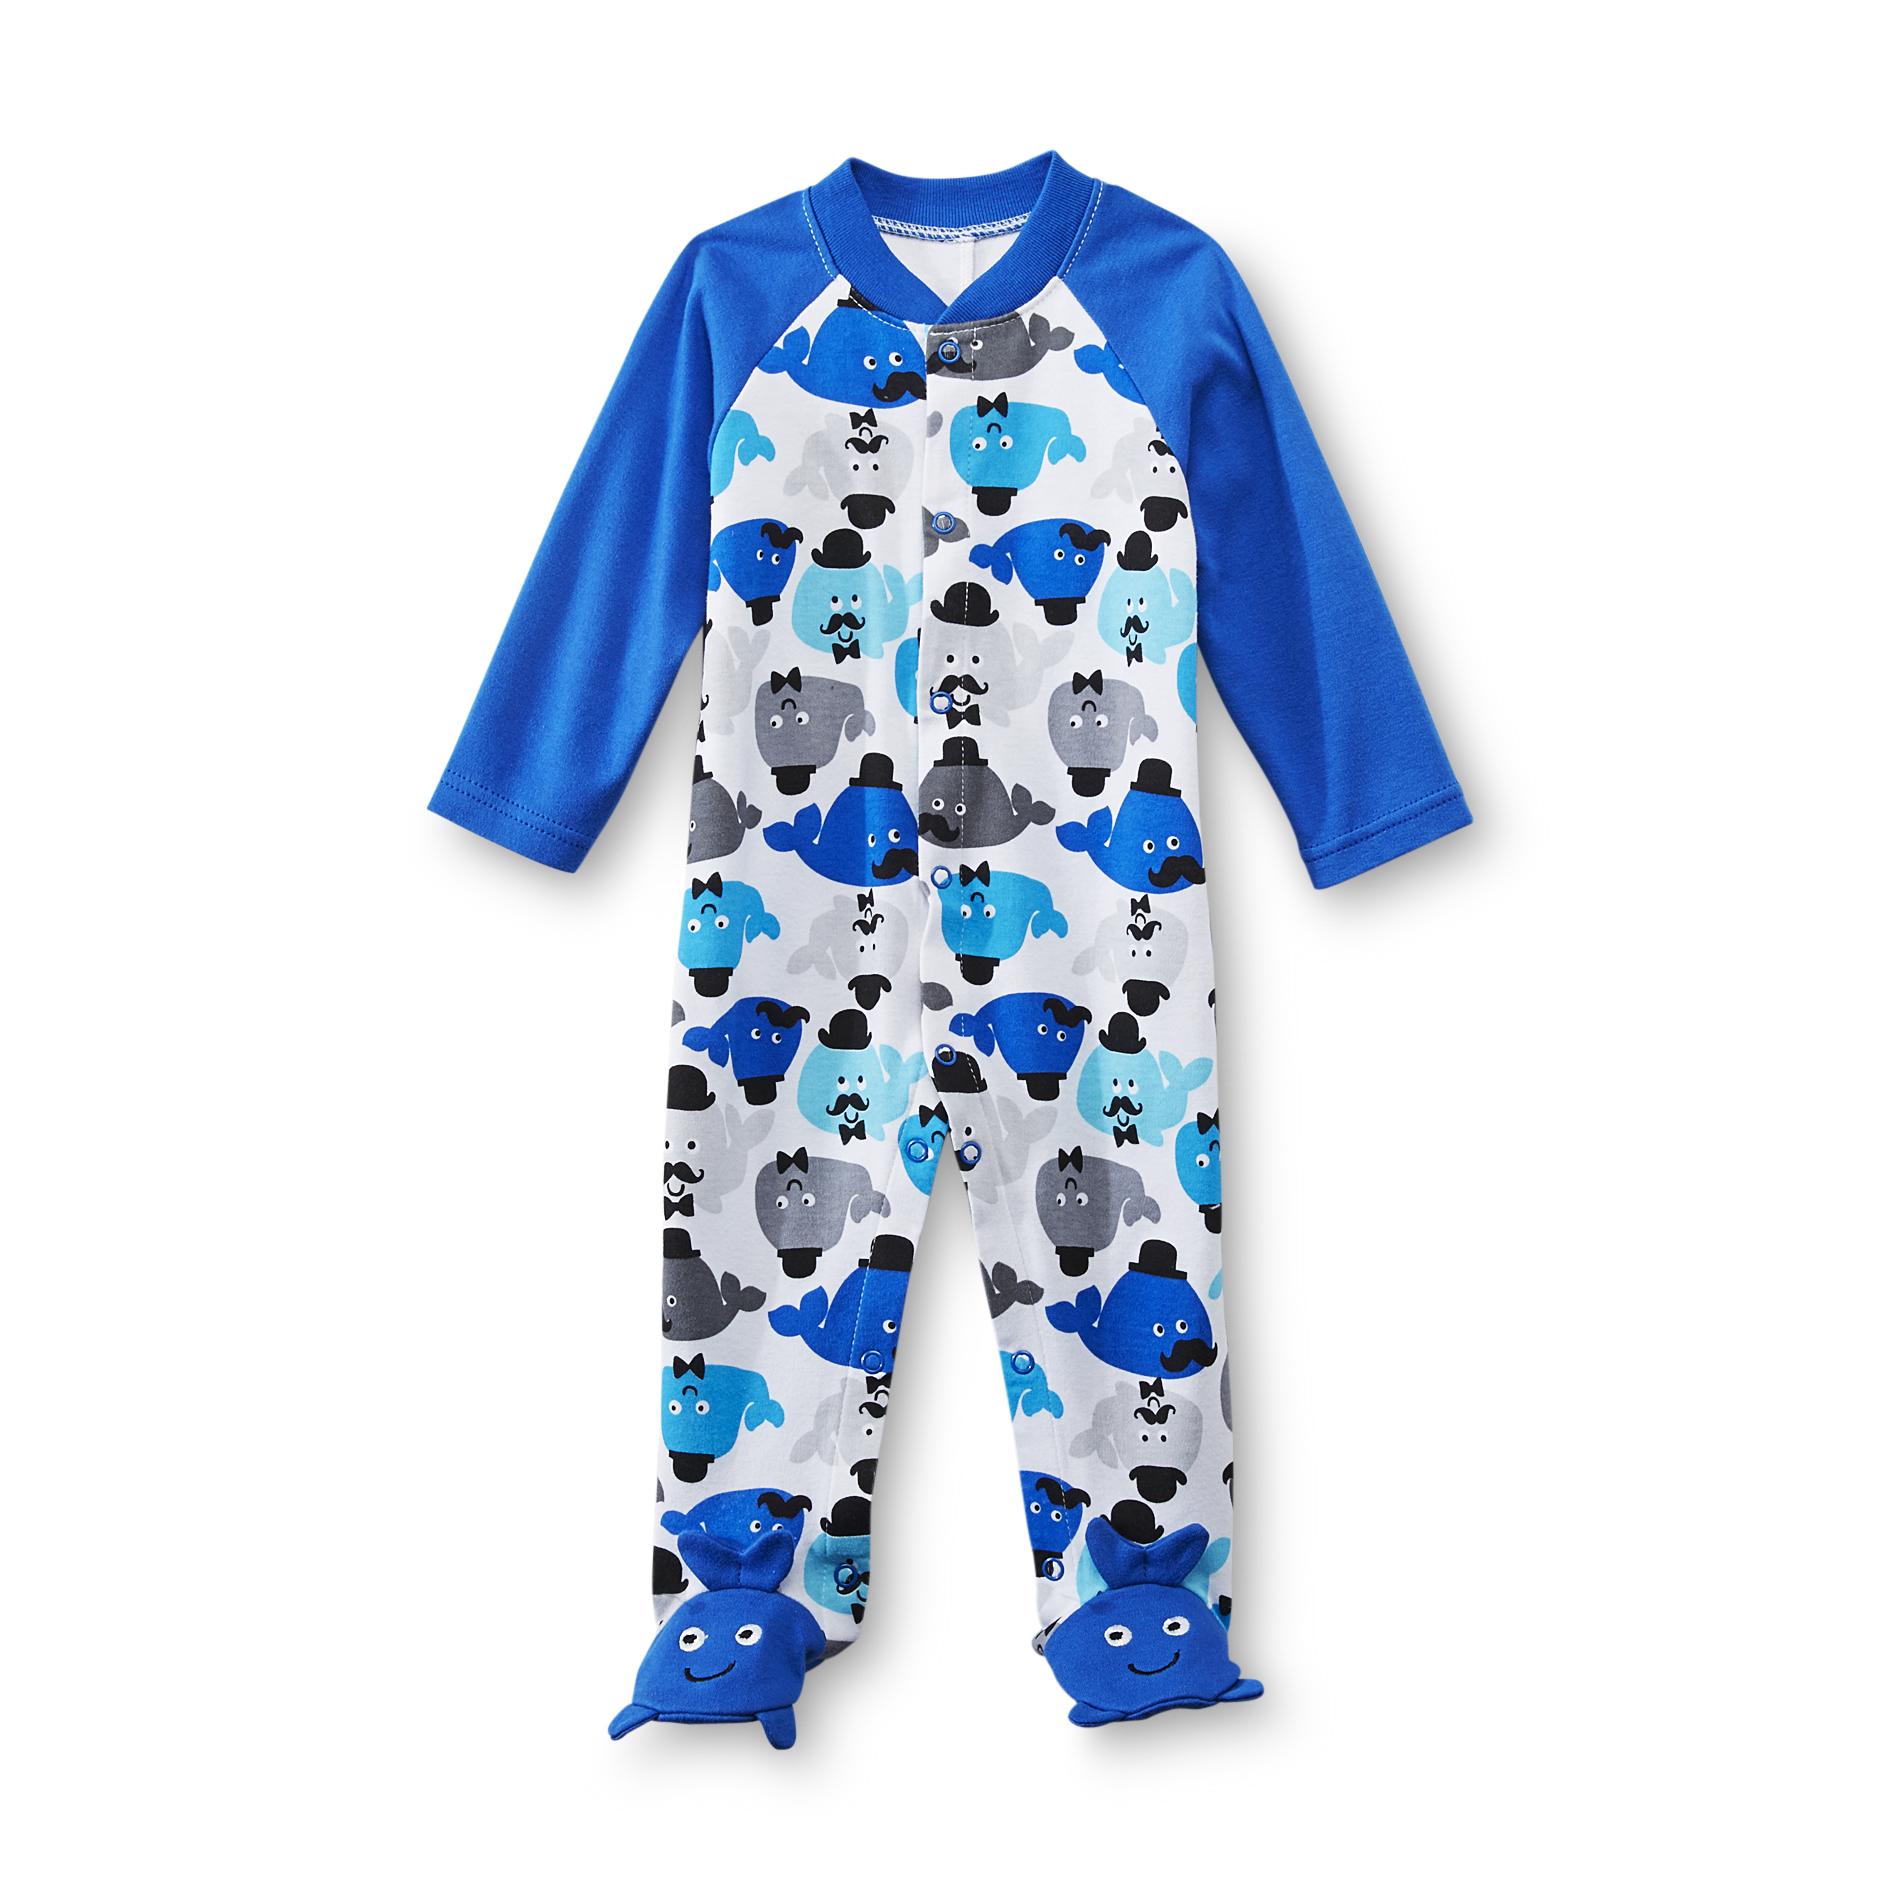 Little Wonders Newborn Boy's Footed Sleeper Pajamas - Whales